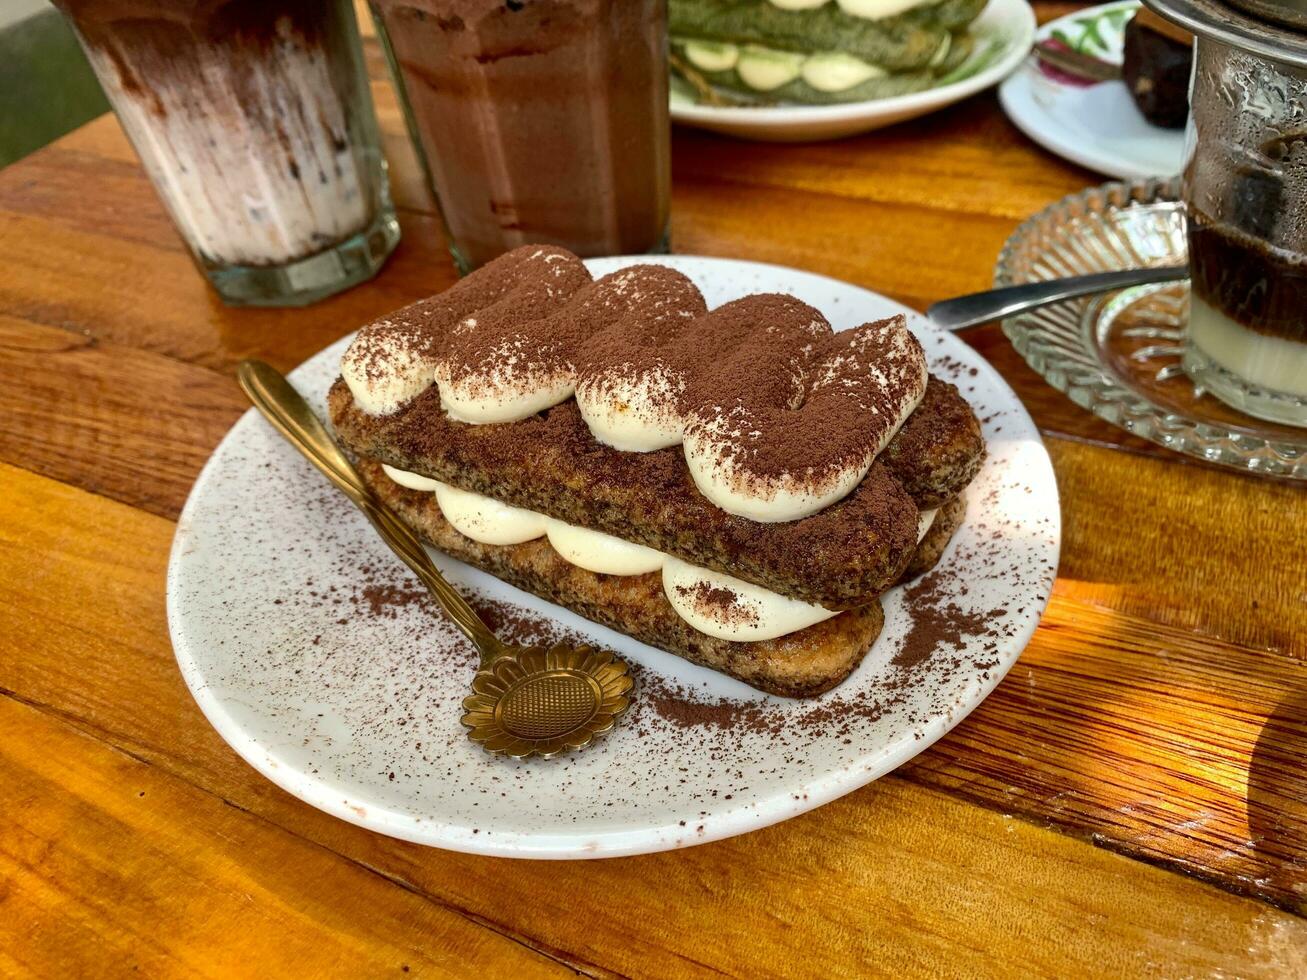 tiramisu, italien en couches dessert avec mascarpone crème, garni avec cacao poudre. photo